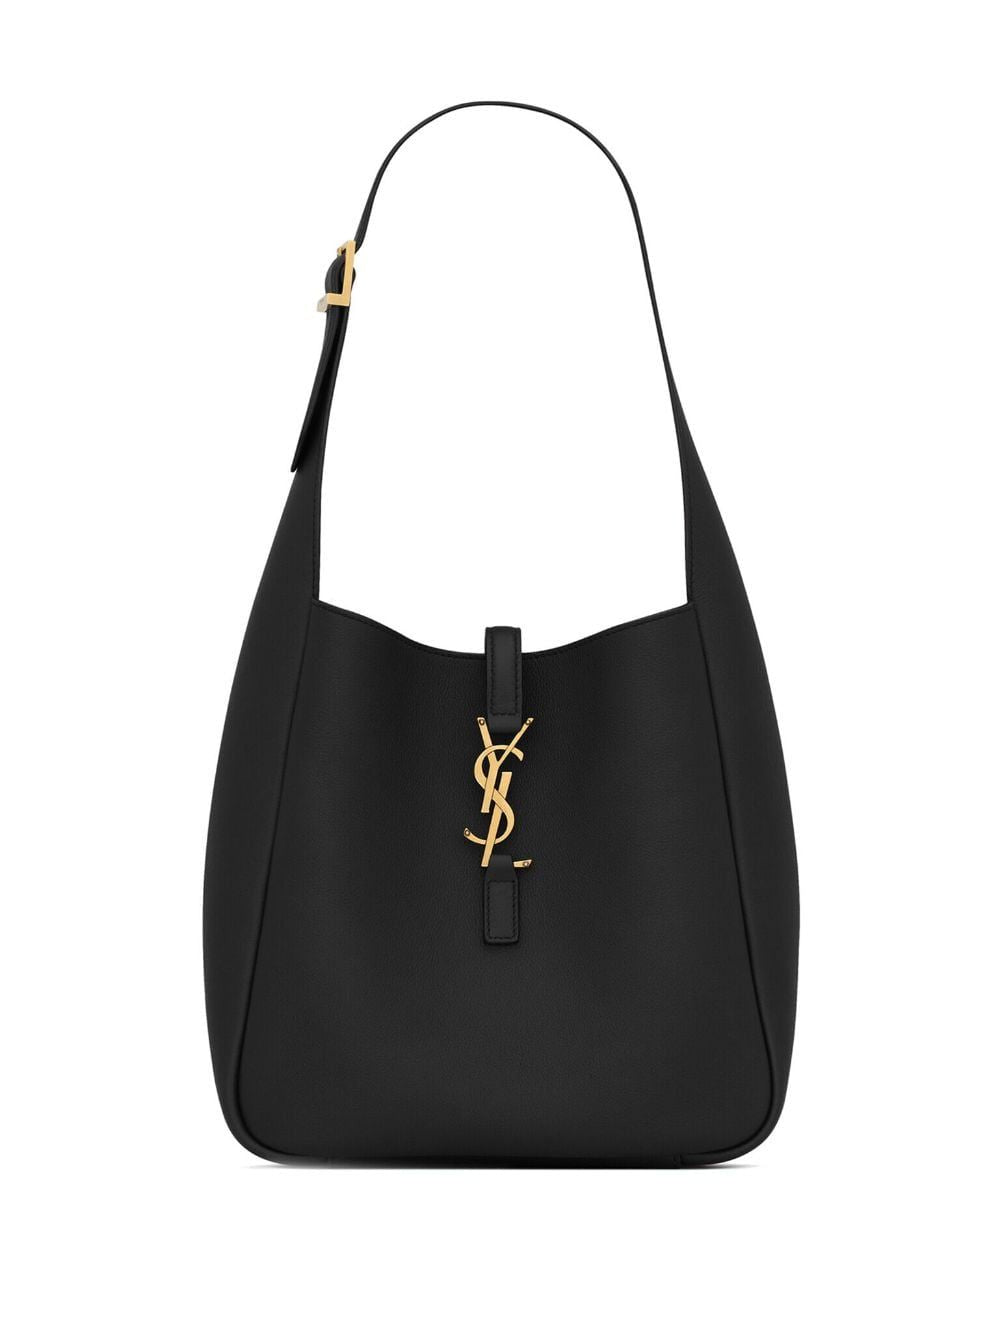 SAINT LAURENT Mini Black Grained Calfskin Handbag with Bronze-Tone Closure and Adjustable Top Handle - 23x22x8.5 cm